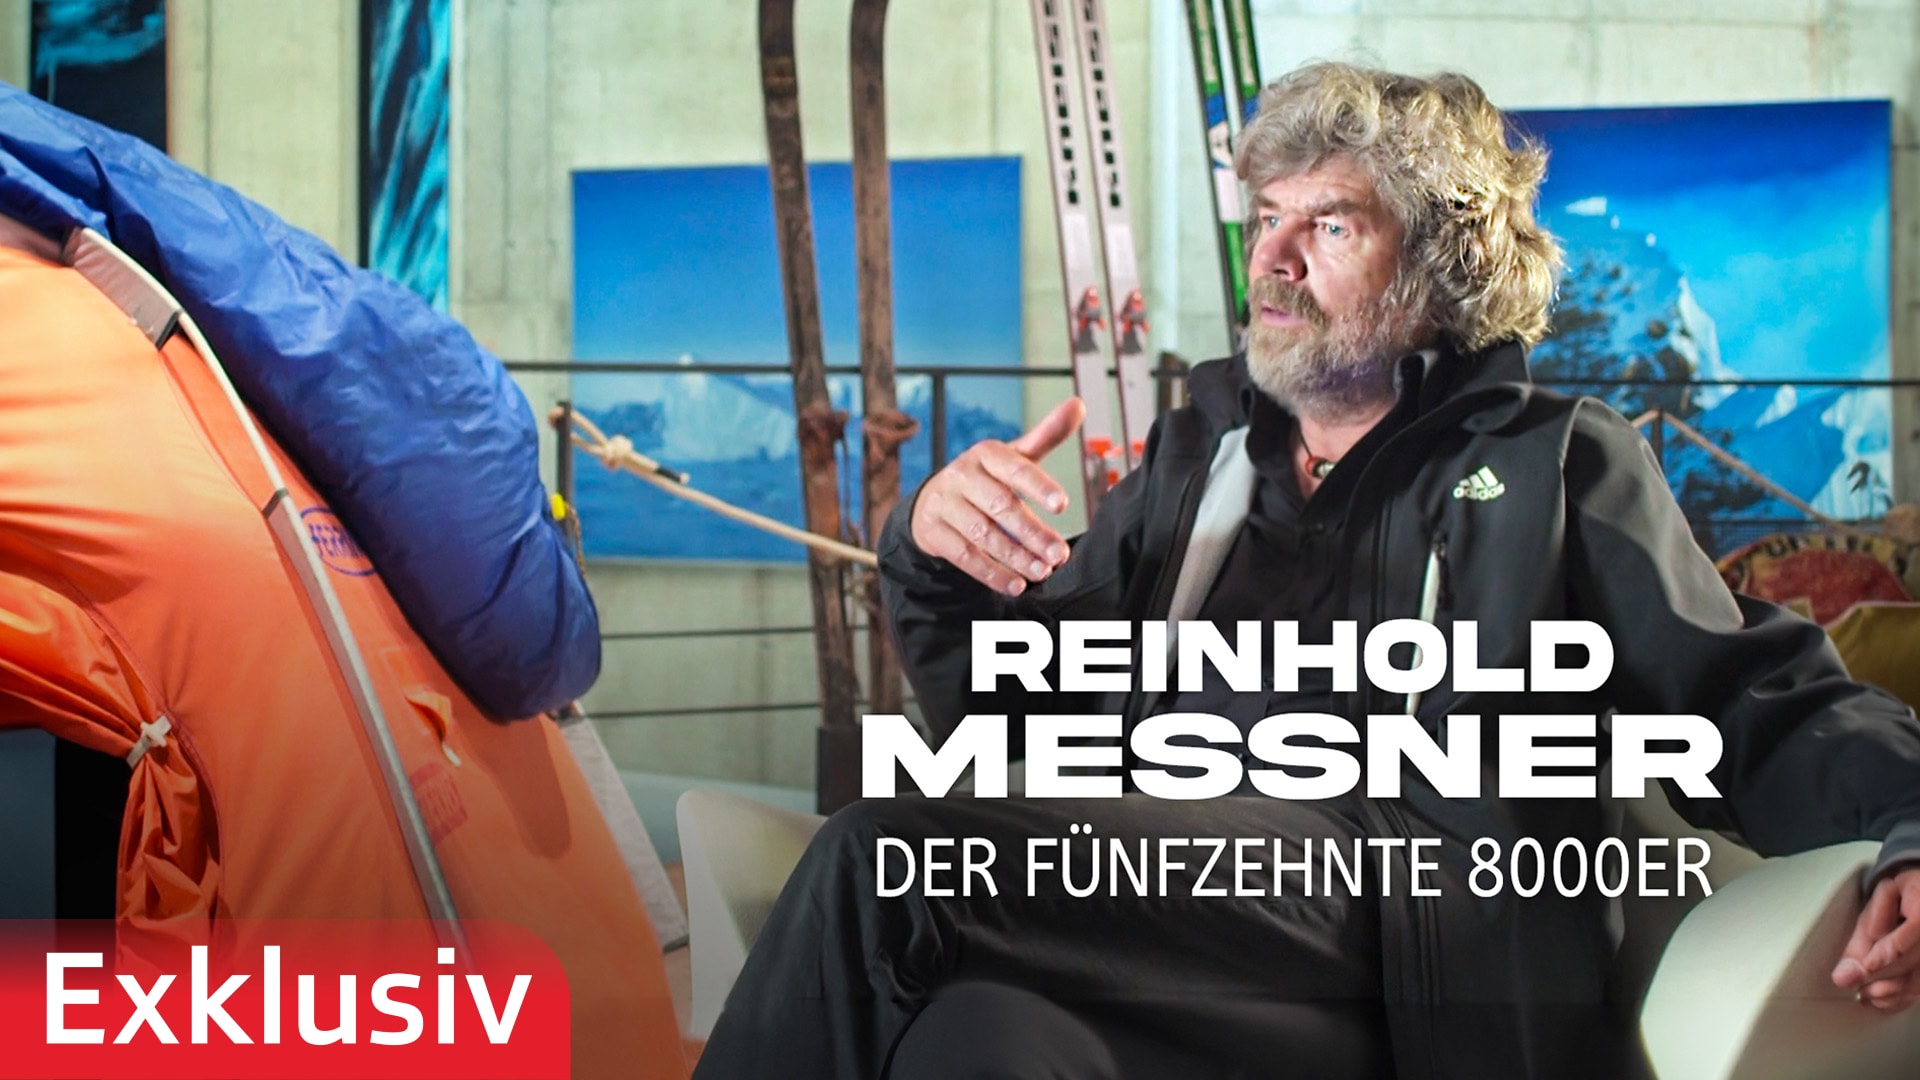 Reinhold Messner, der fünfzehnte 8000er